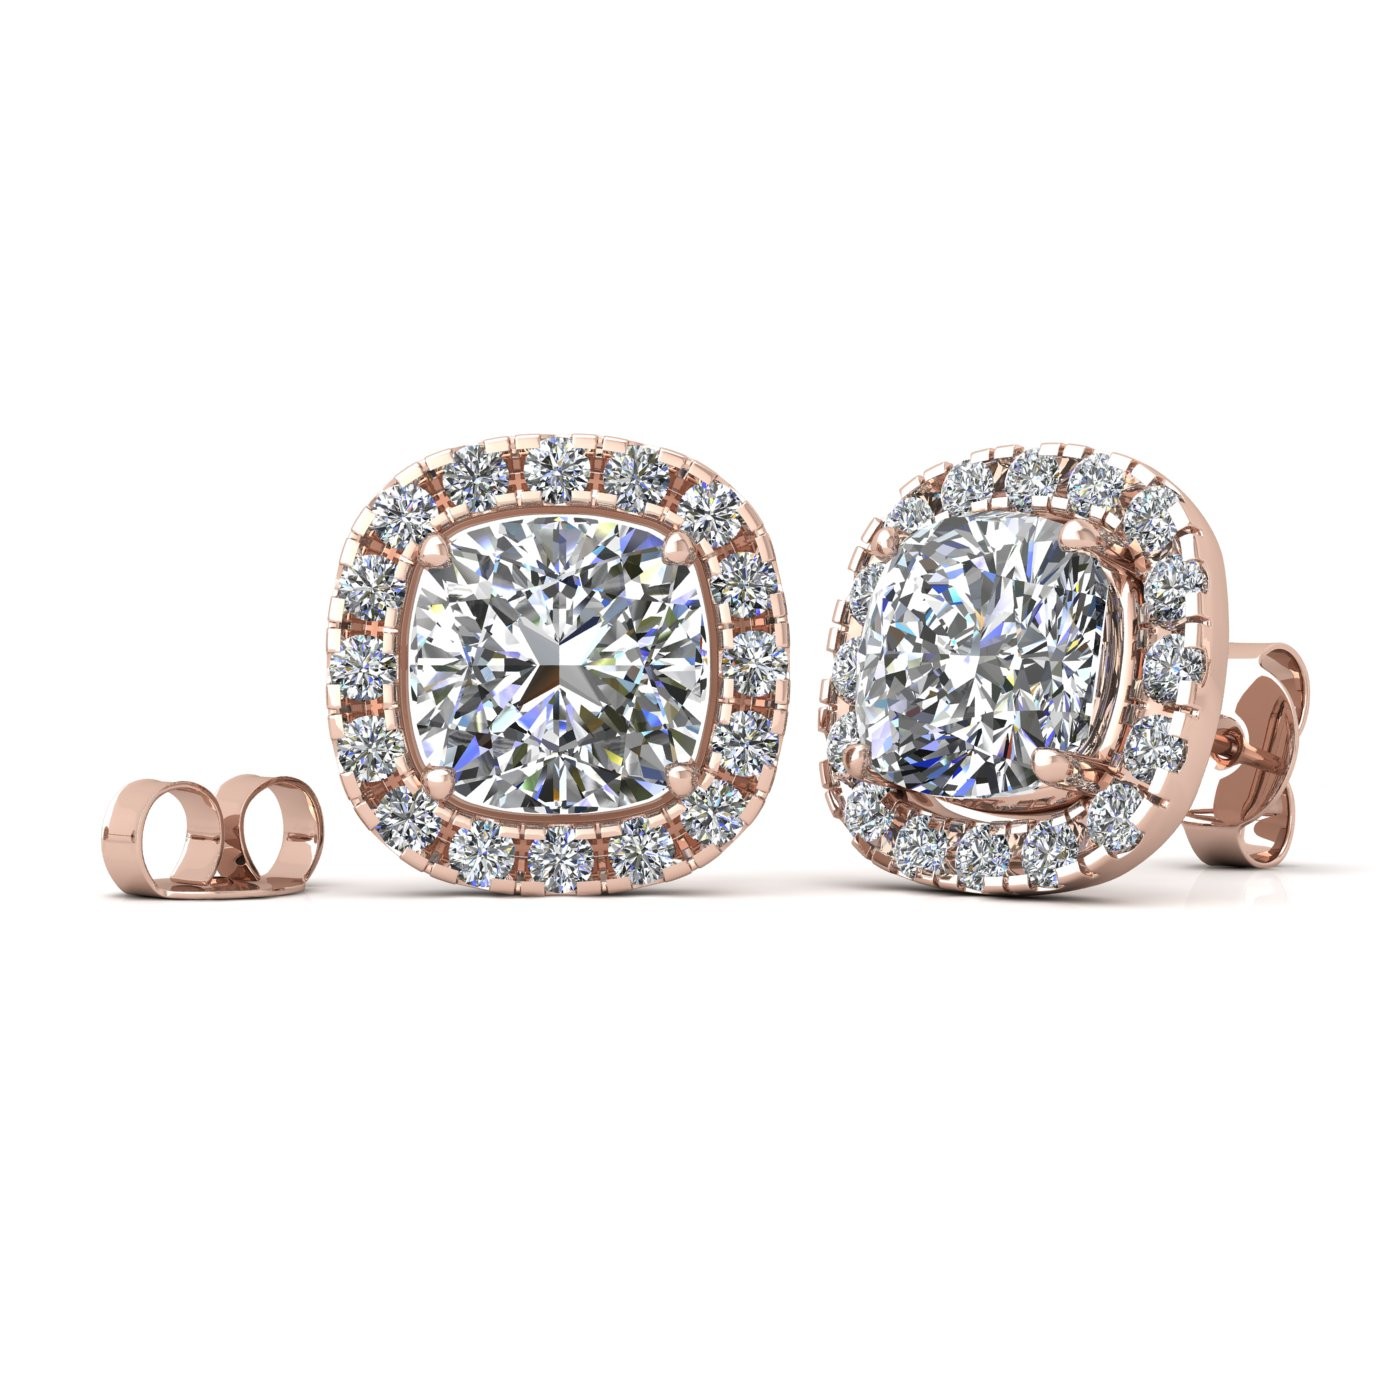 18k rose gold  2,5 ct each (5,0 tcw) 4 prongs cushion shape diamond earrings with diamond pavÉ set halo Photos & images